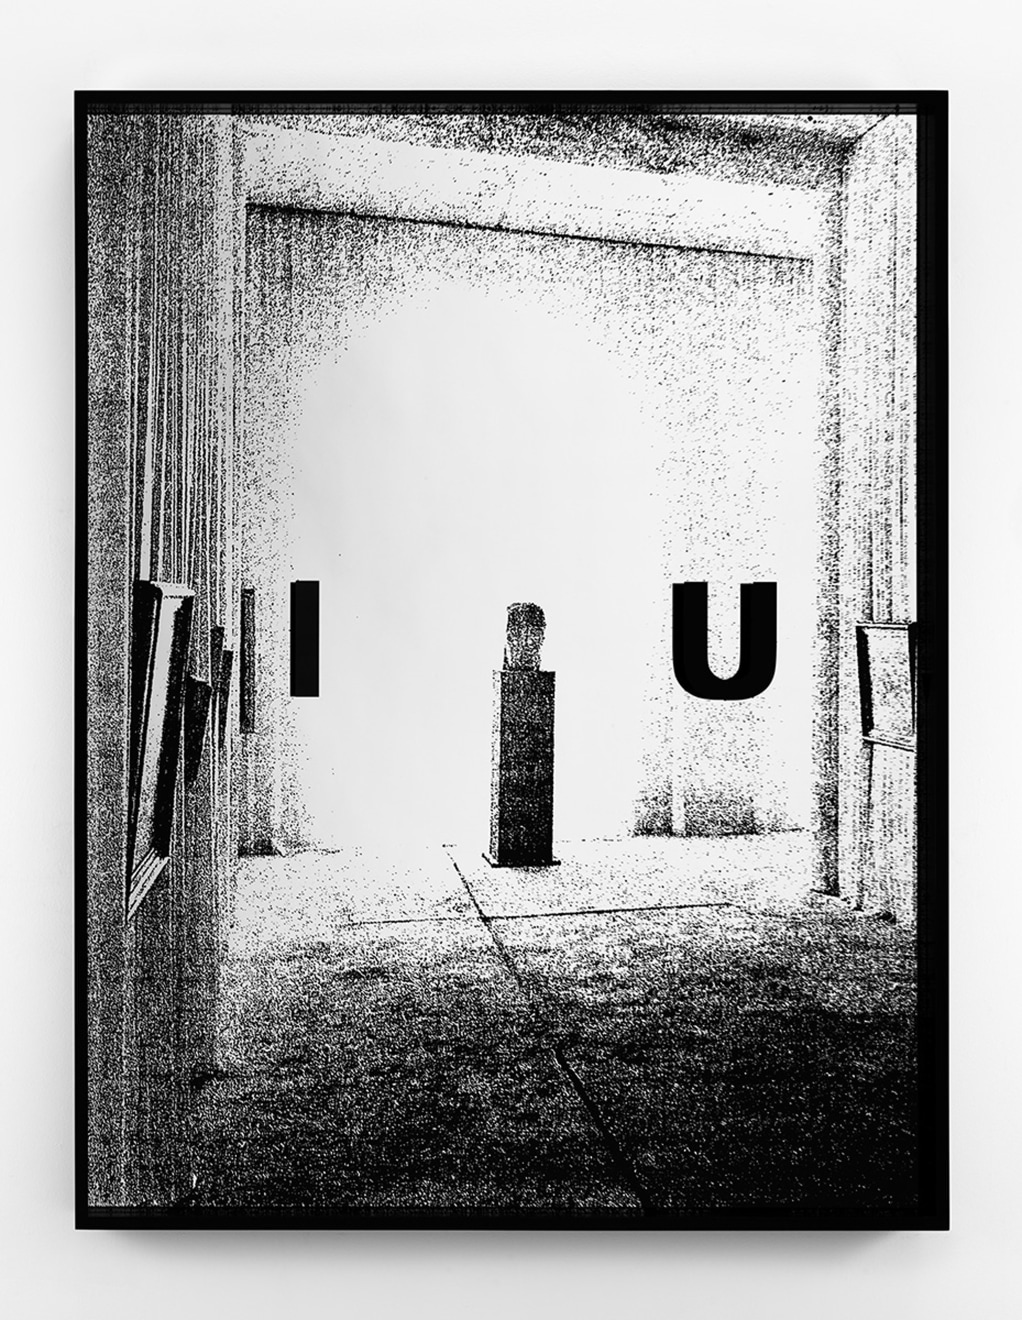 Adam Pendleton System of Display, IU (WITHOUT/Documenta I, Kunsthalle Fridericianum, 1955), 2010